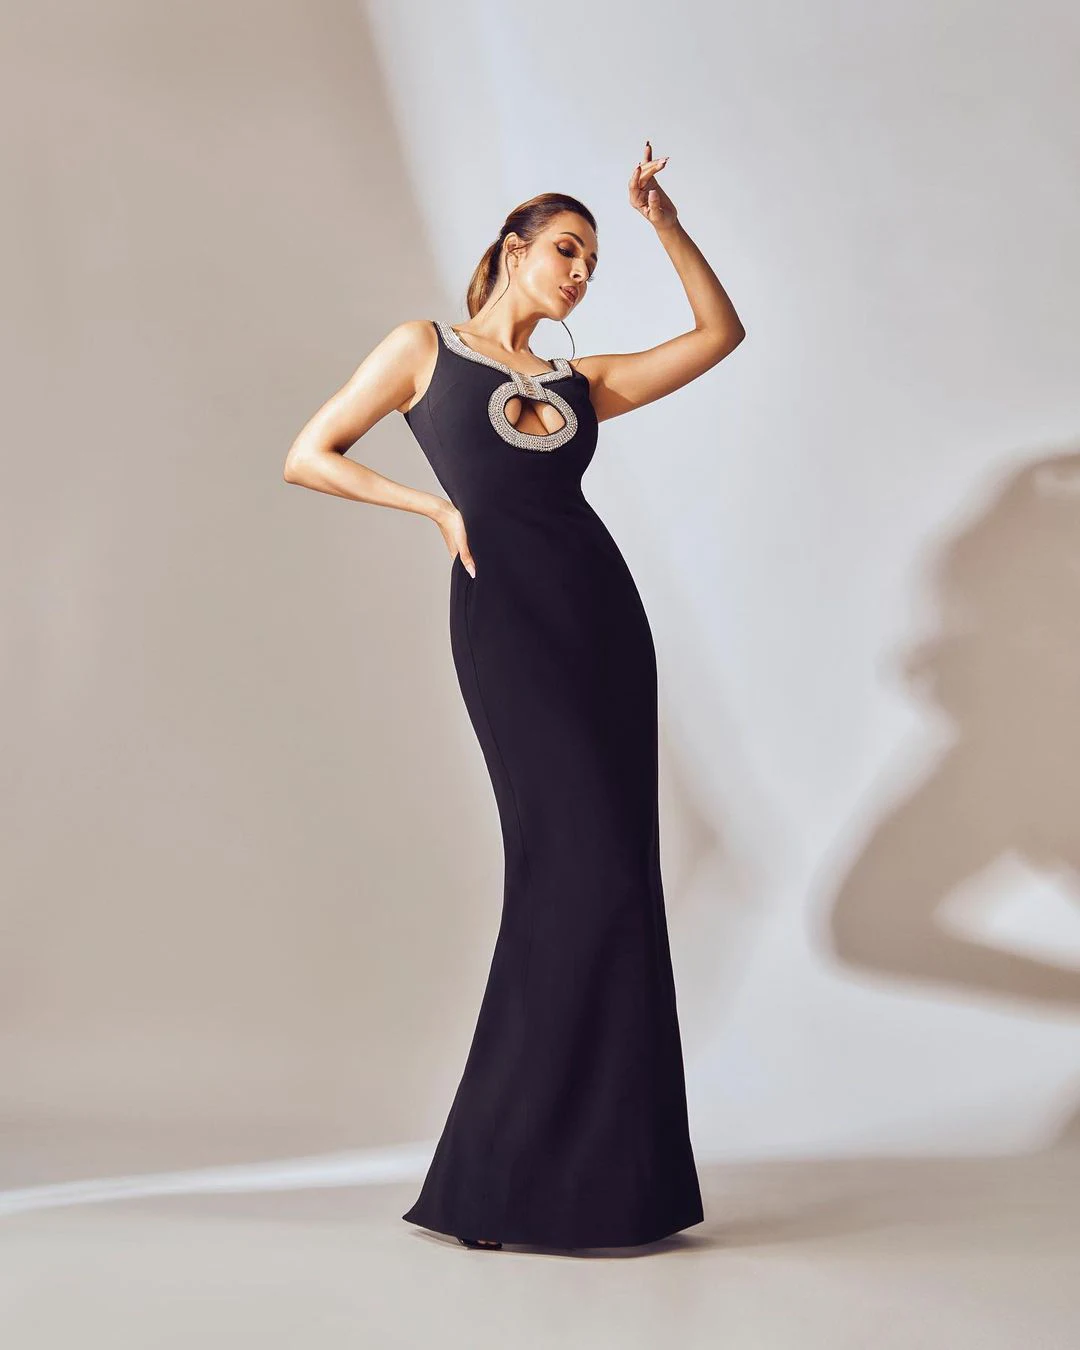 Malaika Arora latest photoshoot in black dress